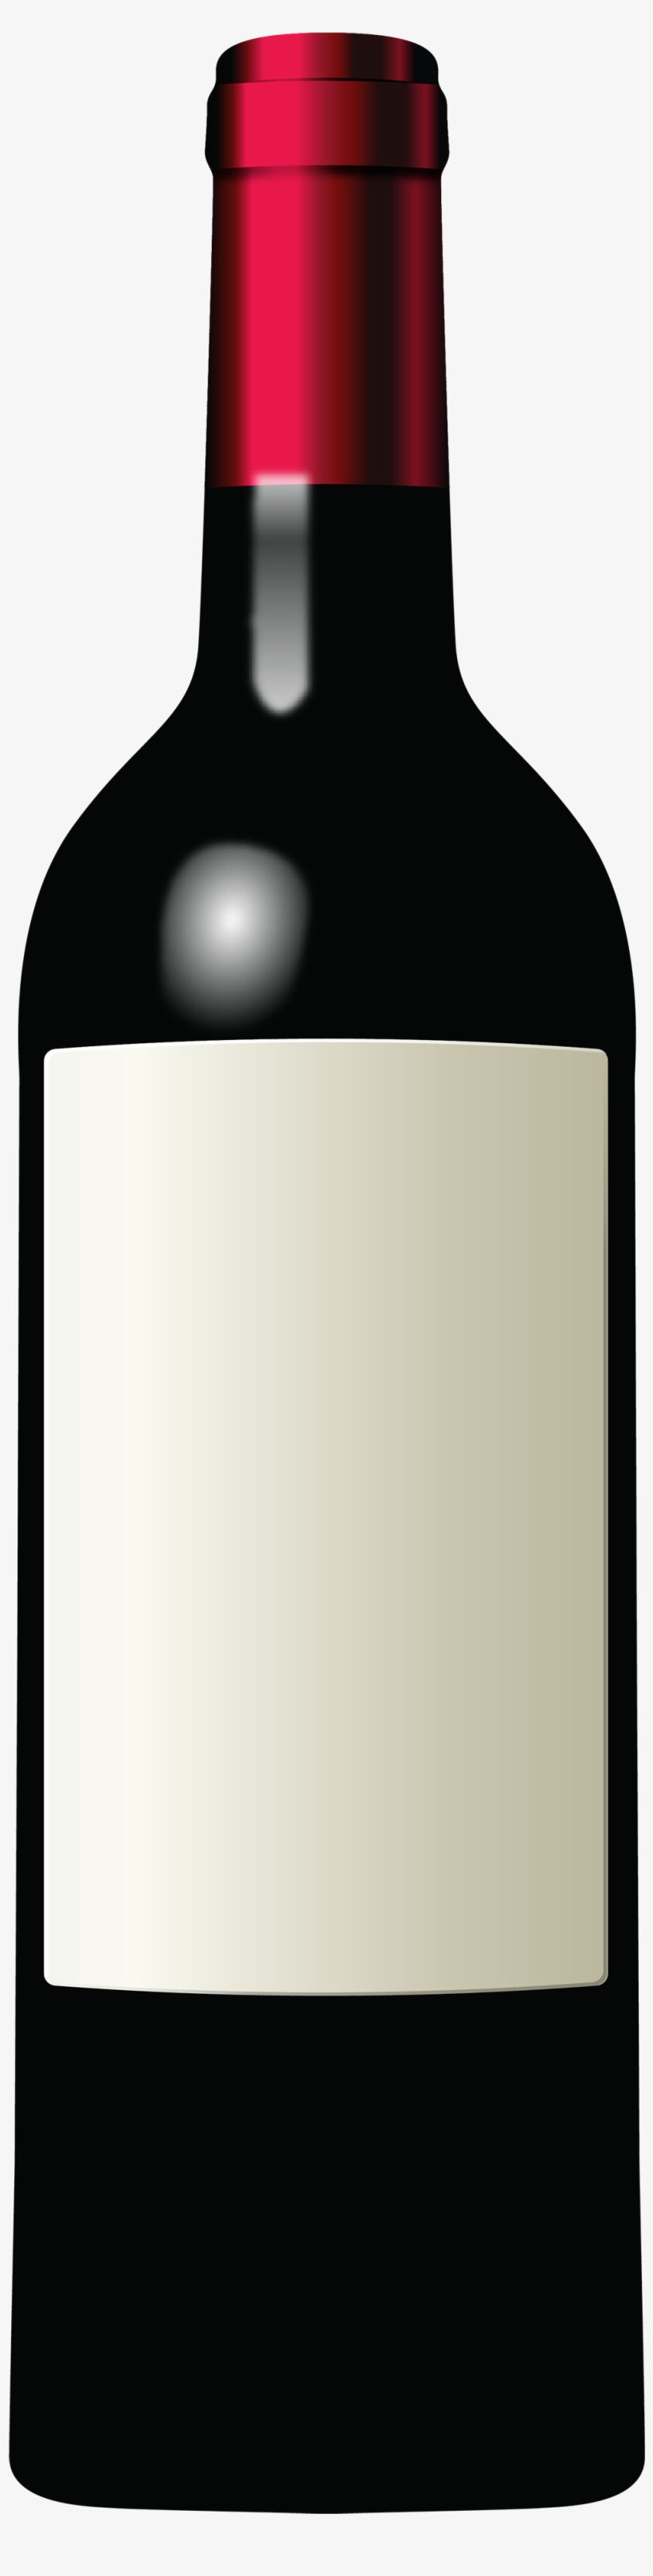 Wine Bottle Png Clipart - Wine, transparent png #109177